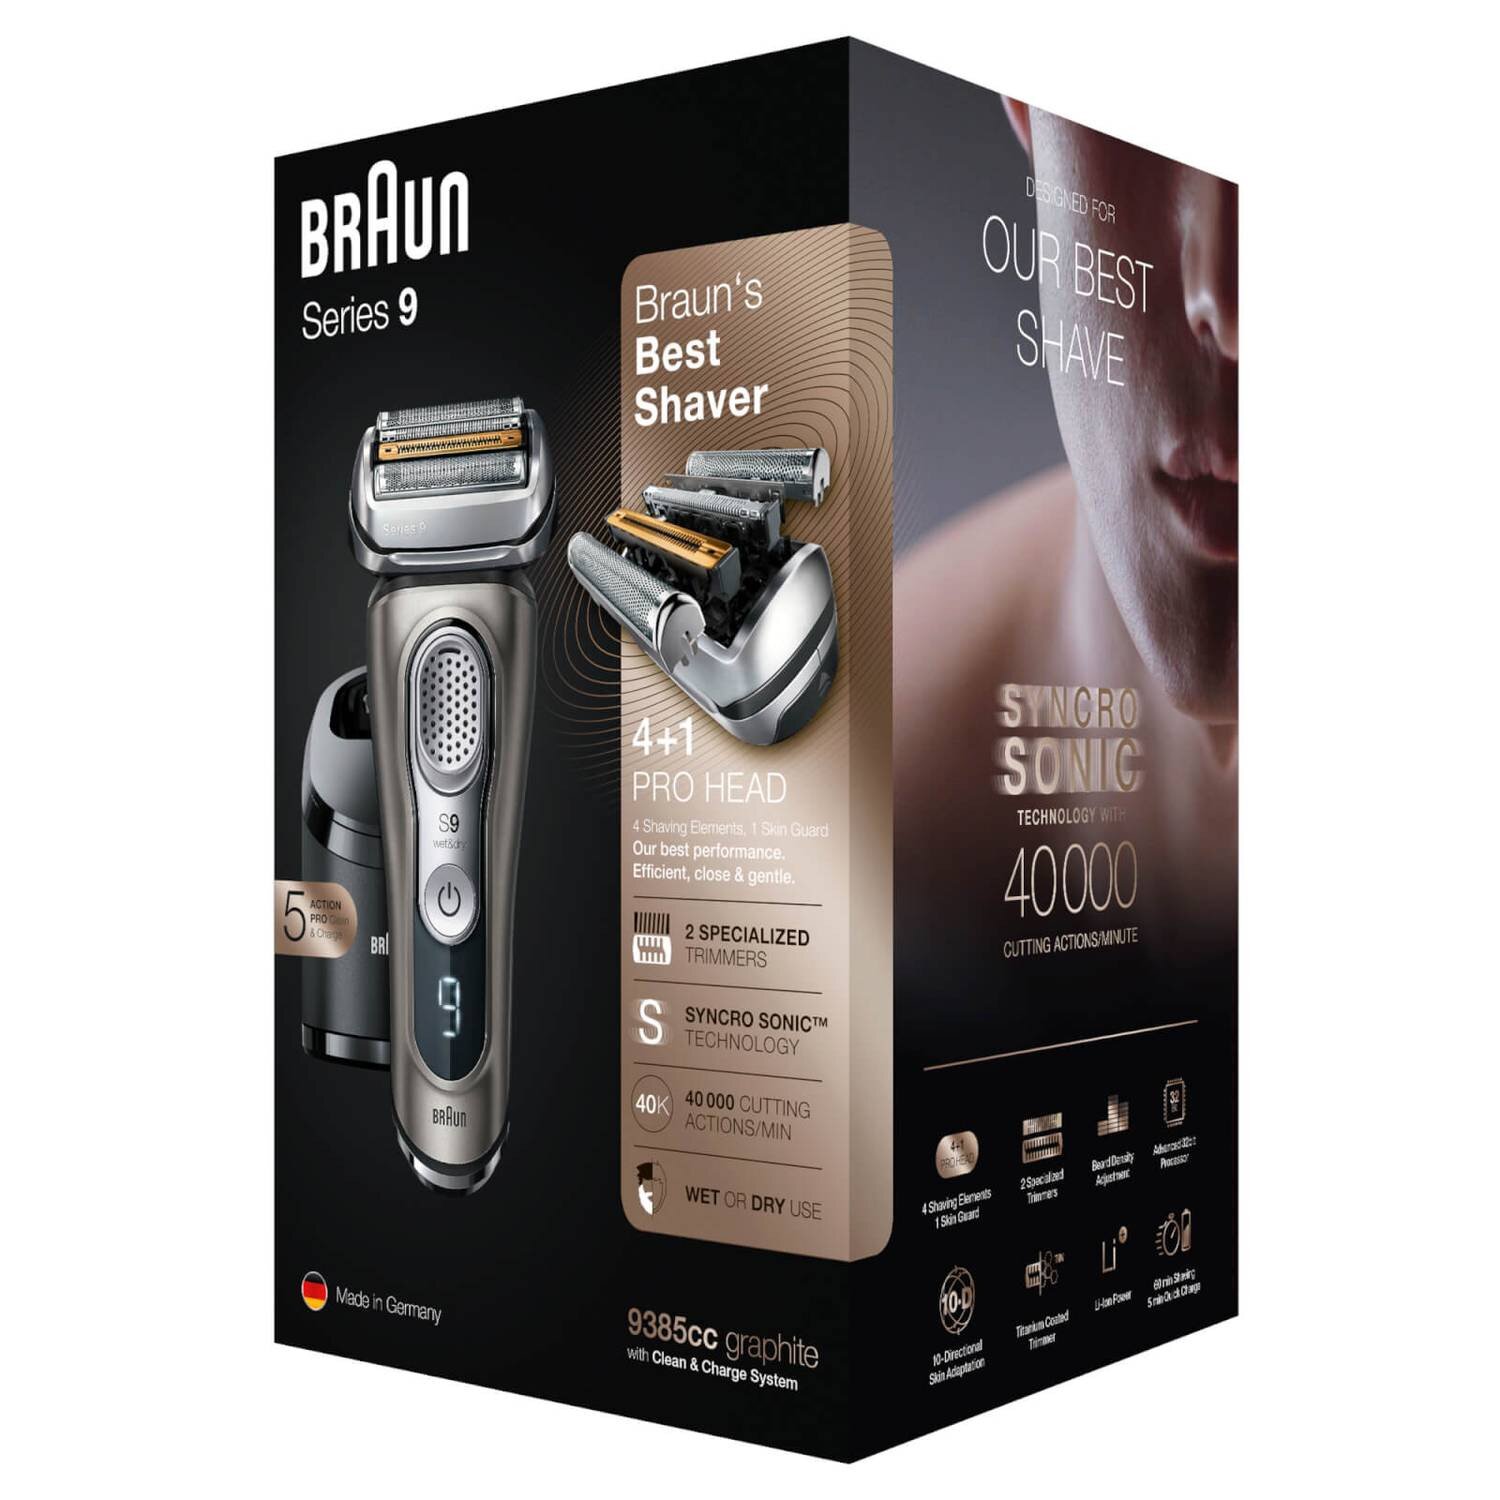 Buy Braun Series 9 9390cc Wet & Dry Electric Shaver online in Pakistan 